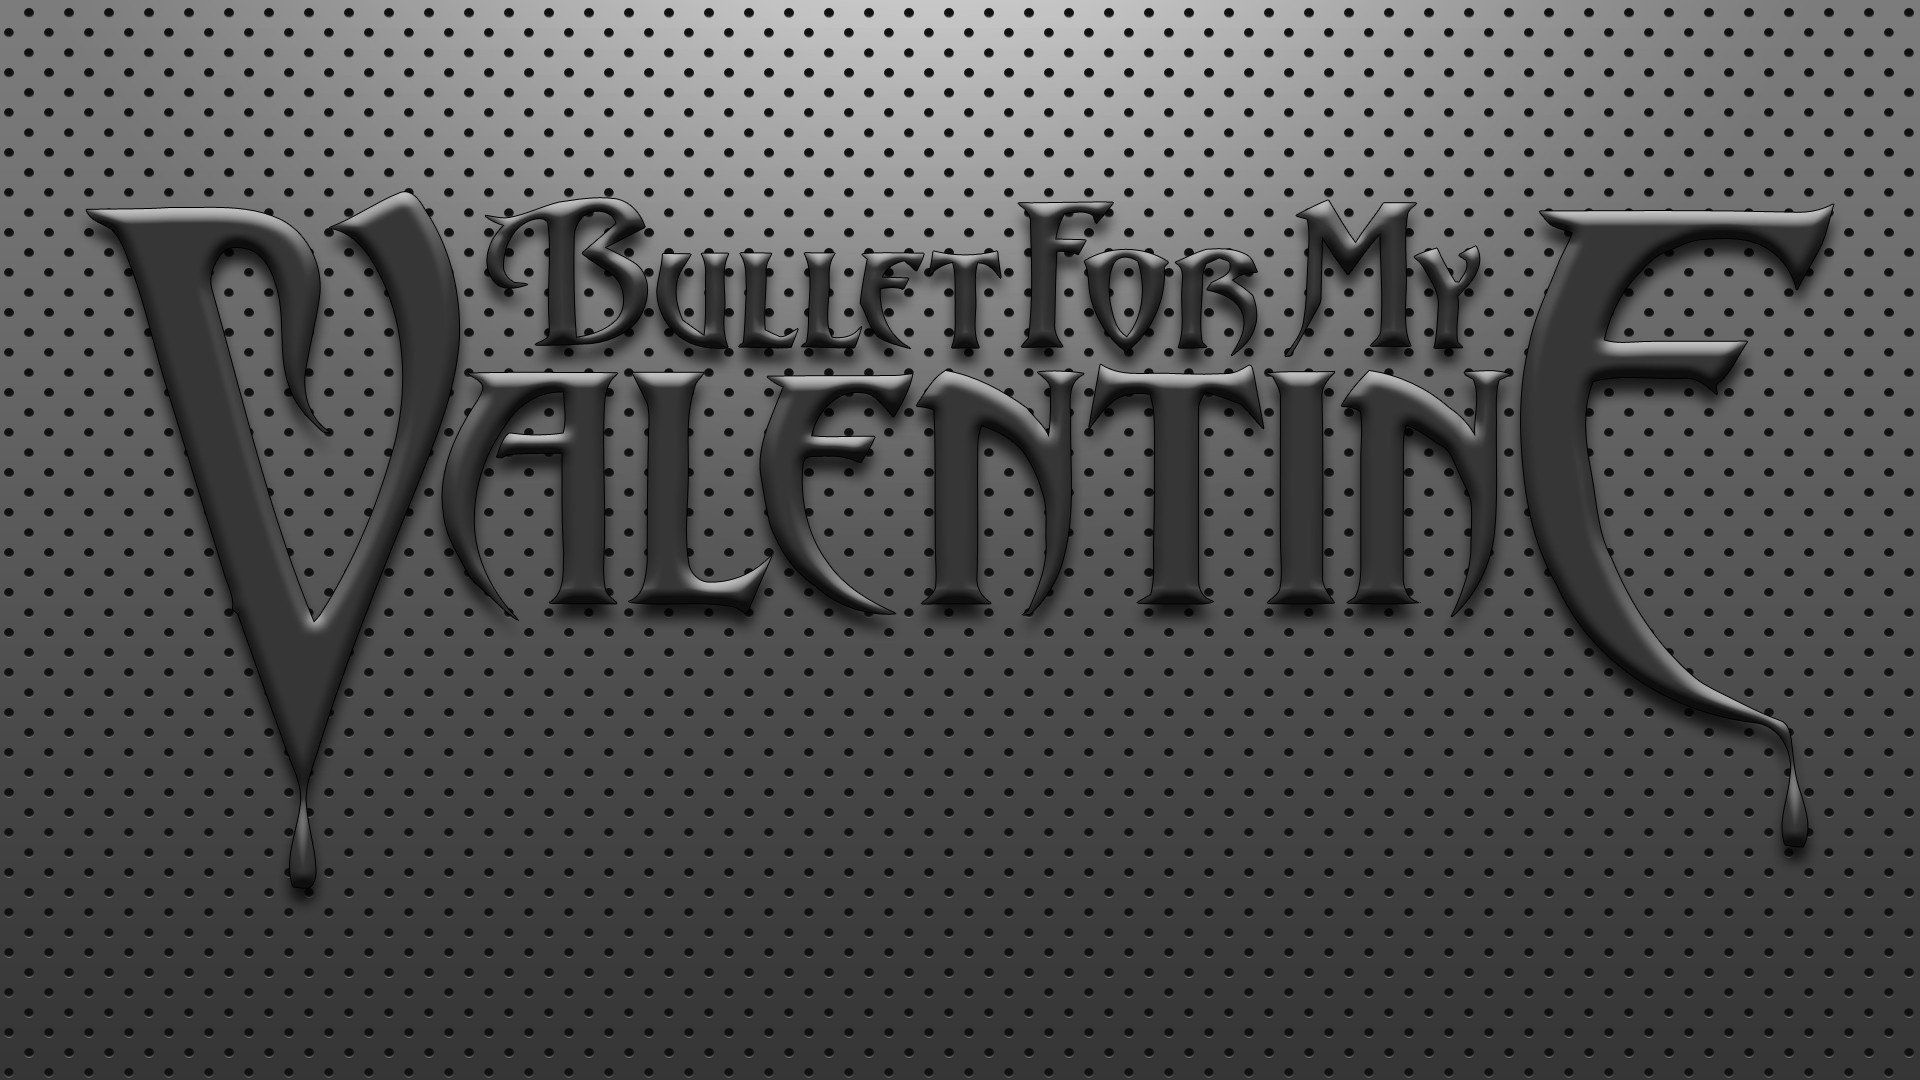 Wallpaper De A7x Megadeth Y Bullet For My Valentine En HD